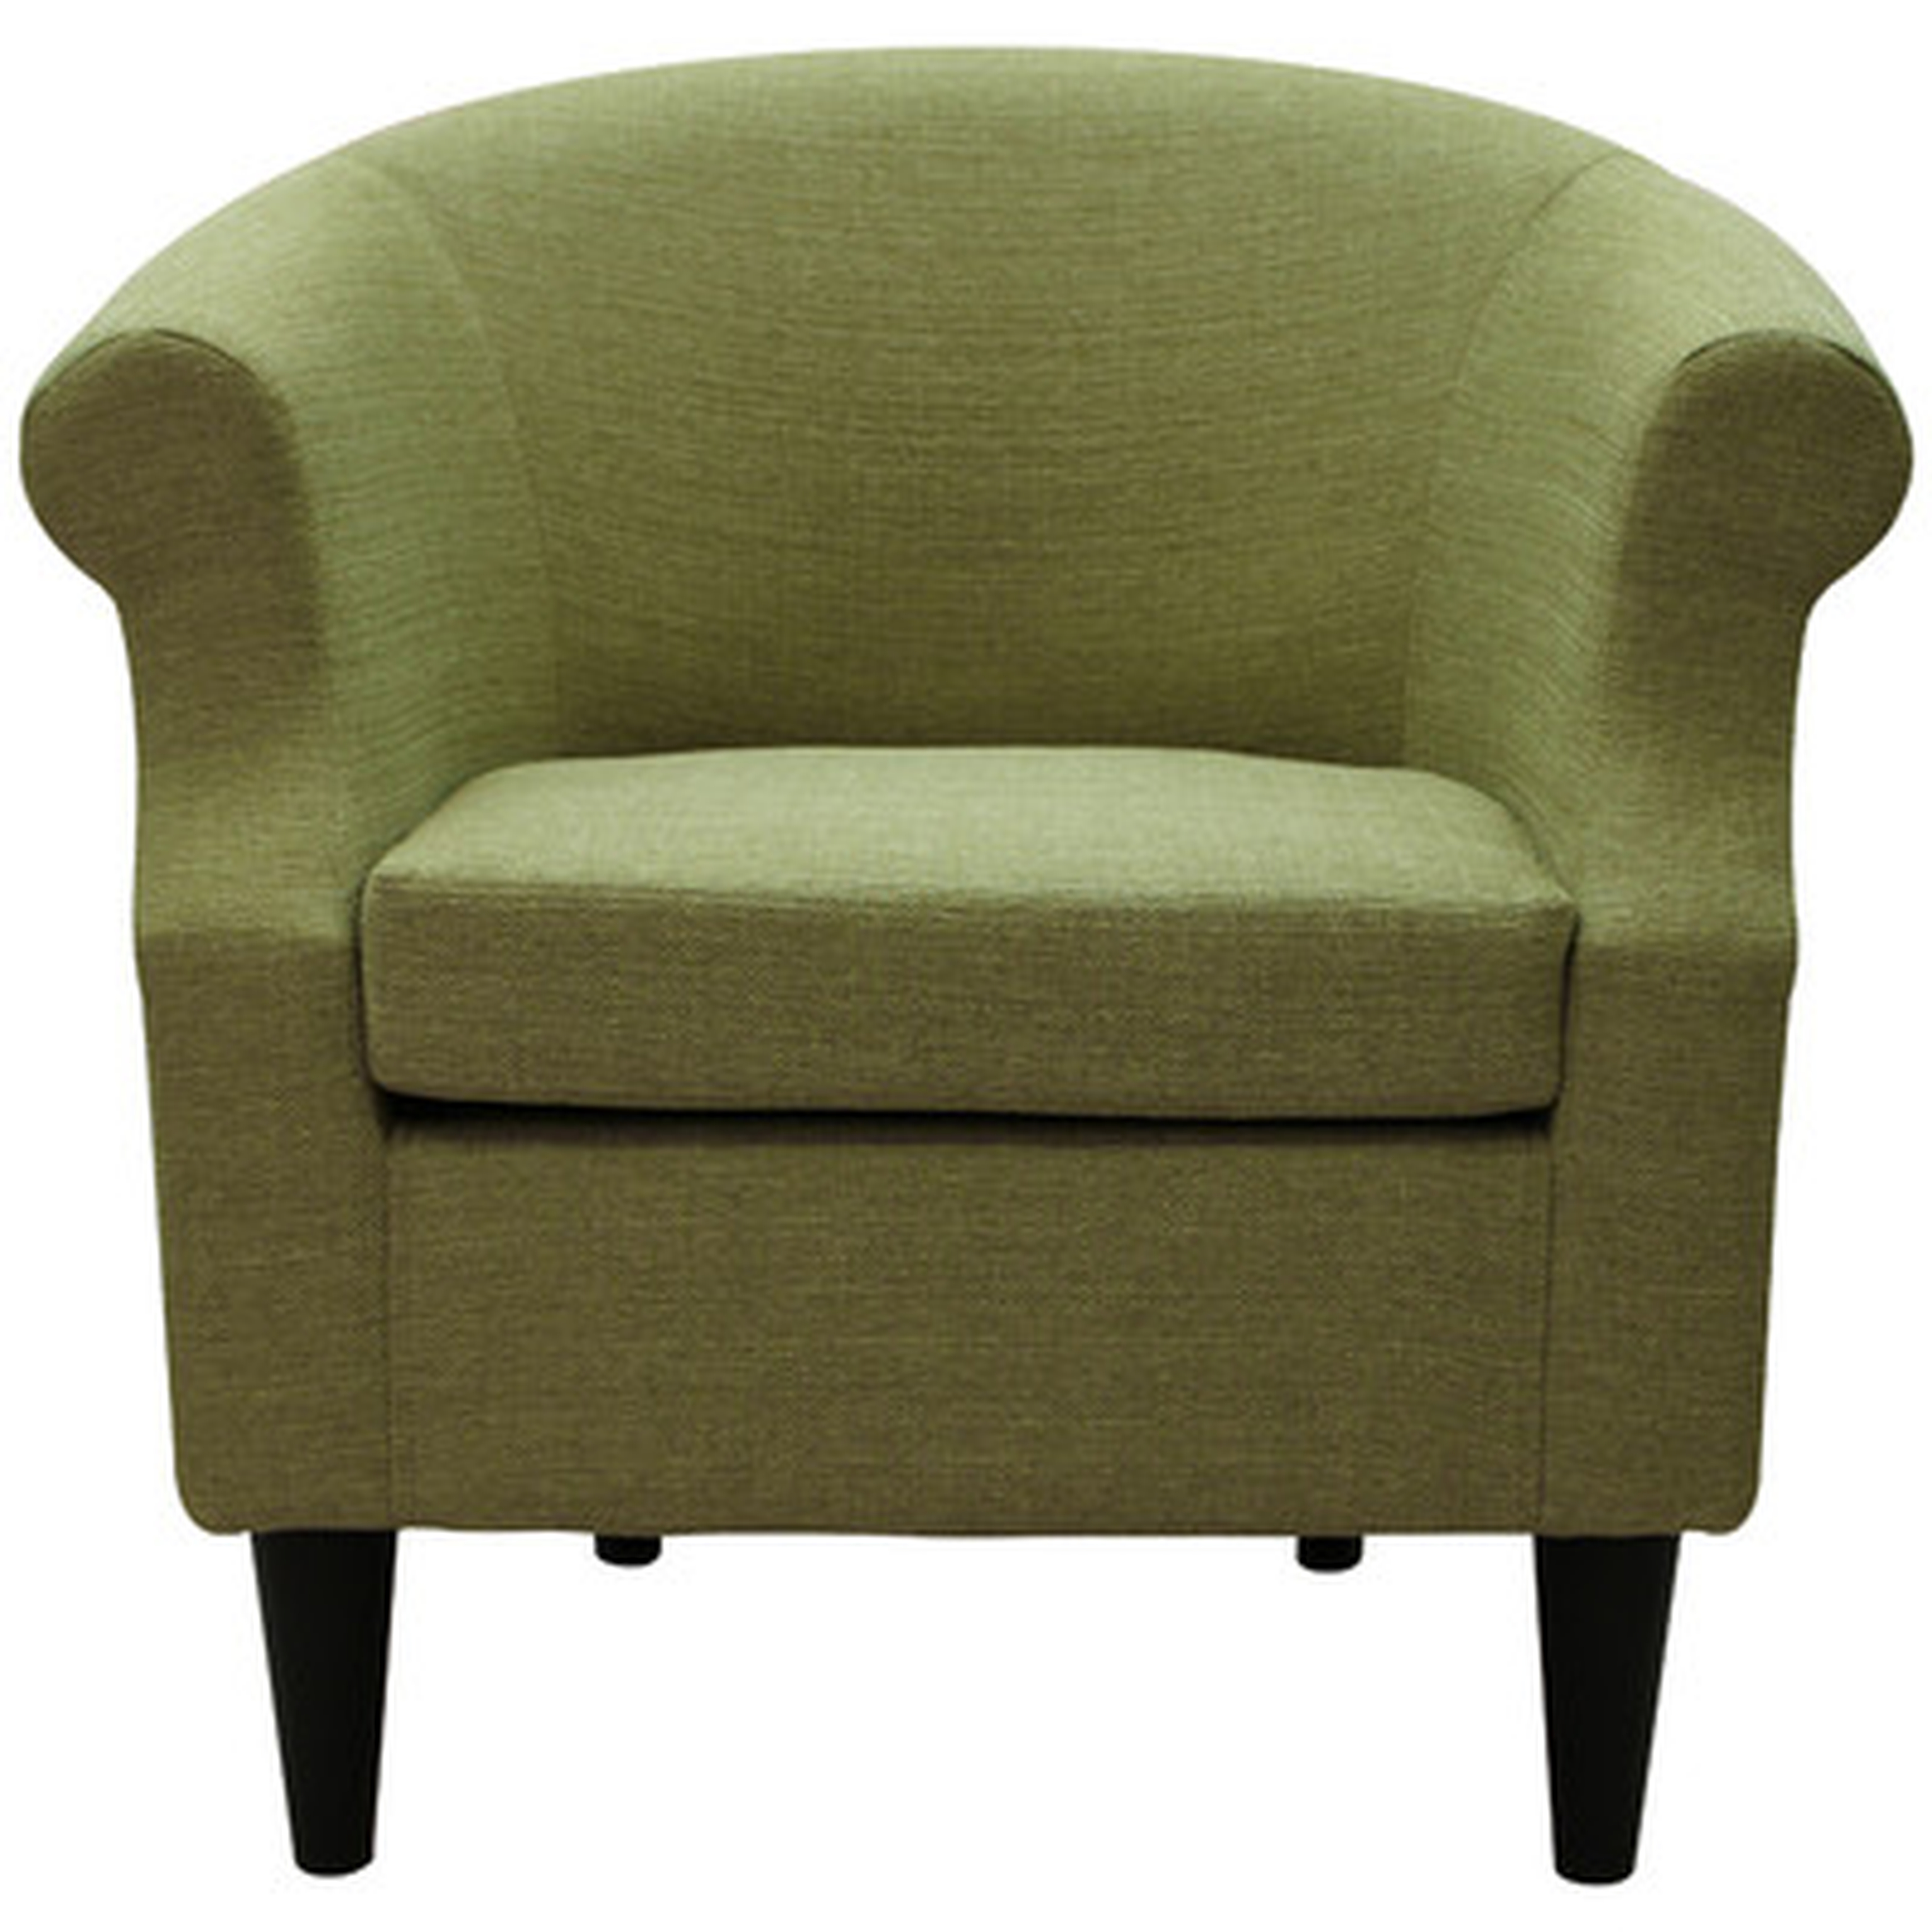 Marsdeni Barrel Chair - Wayfair